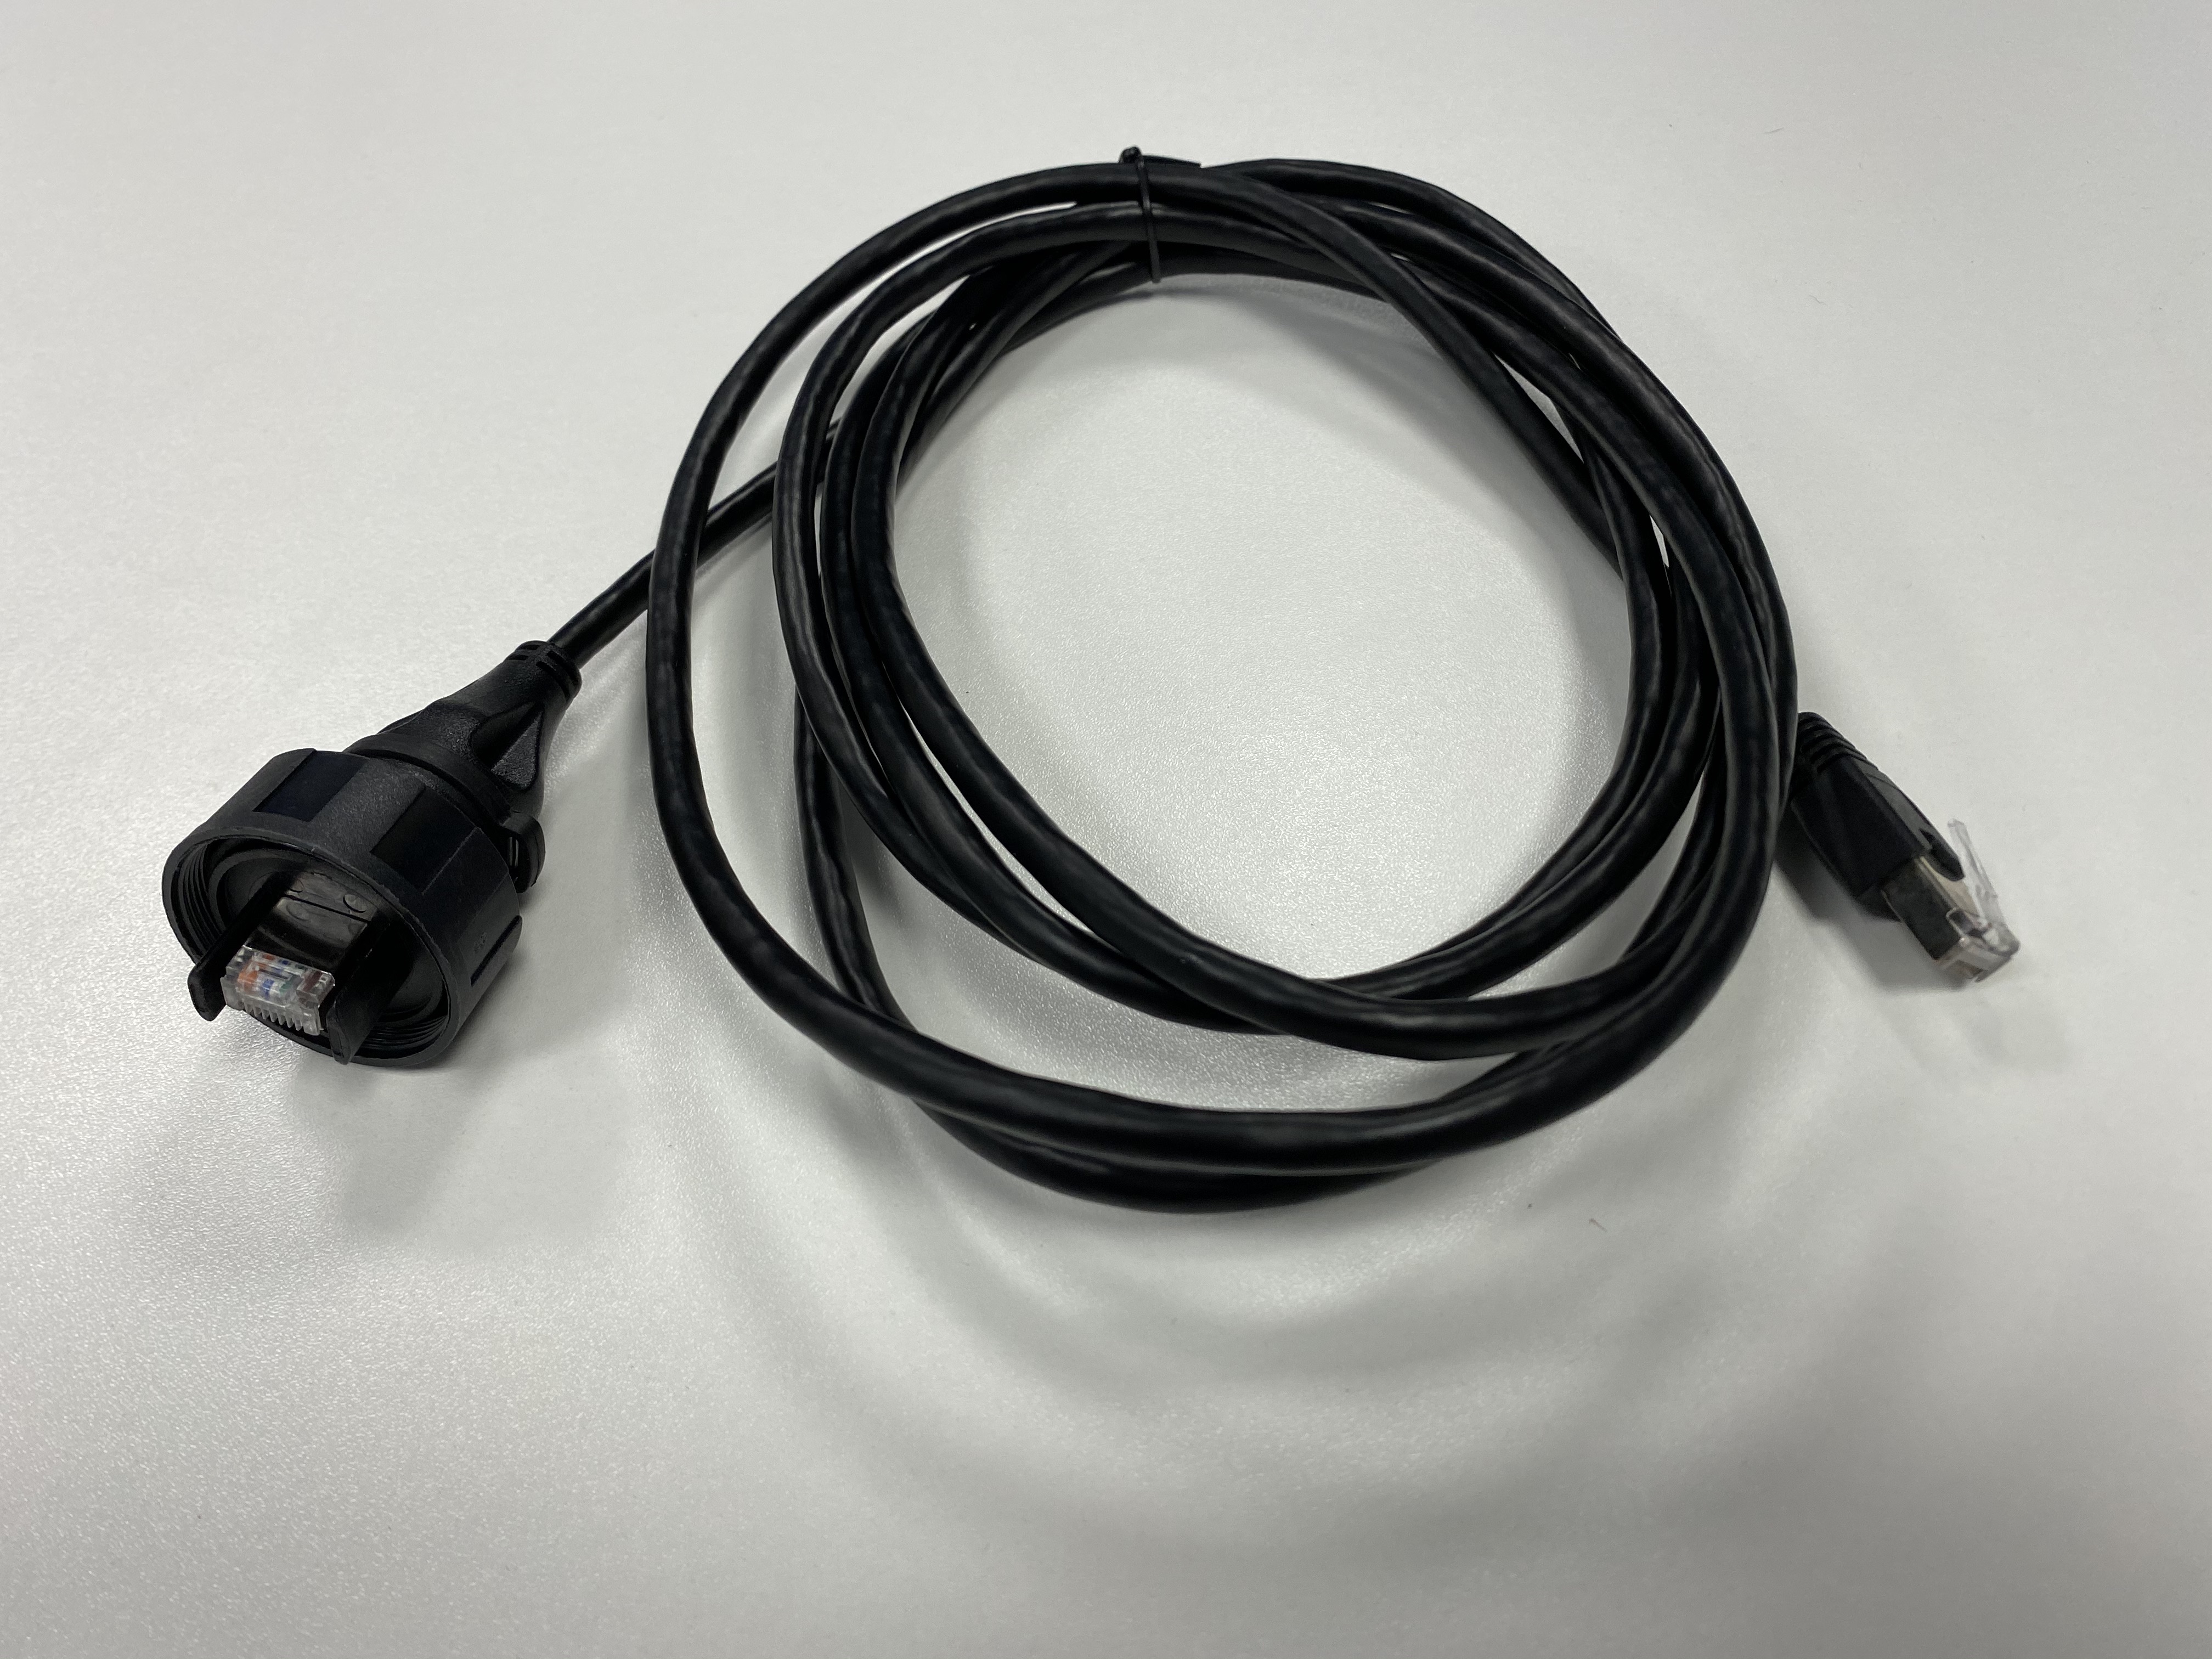 Hmi Ethernet Cable For P7 & P7XP